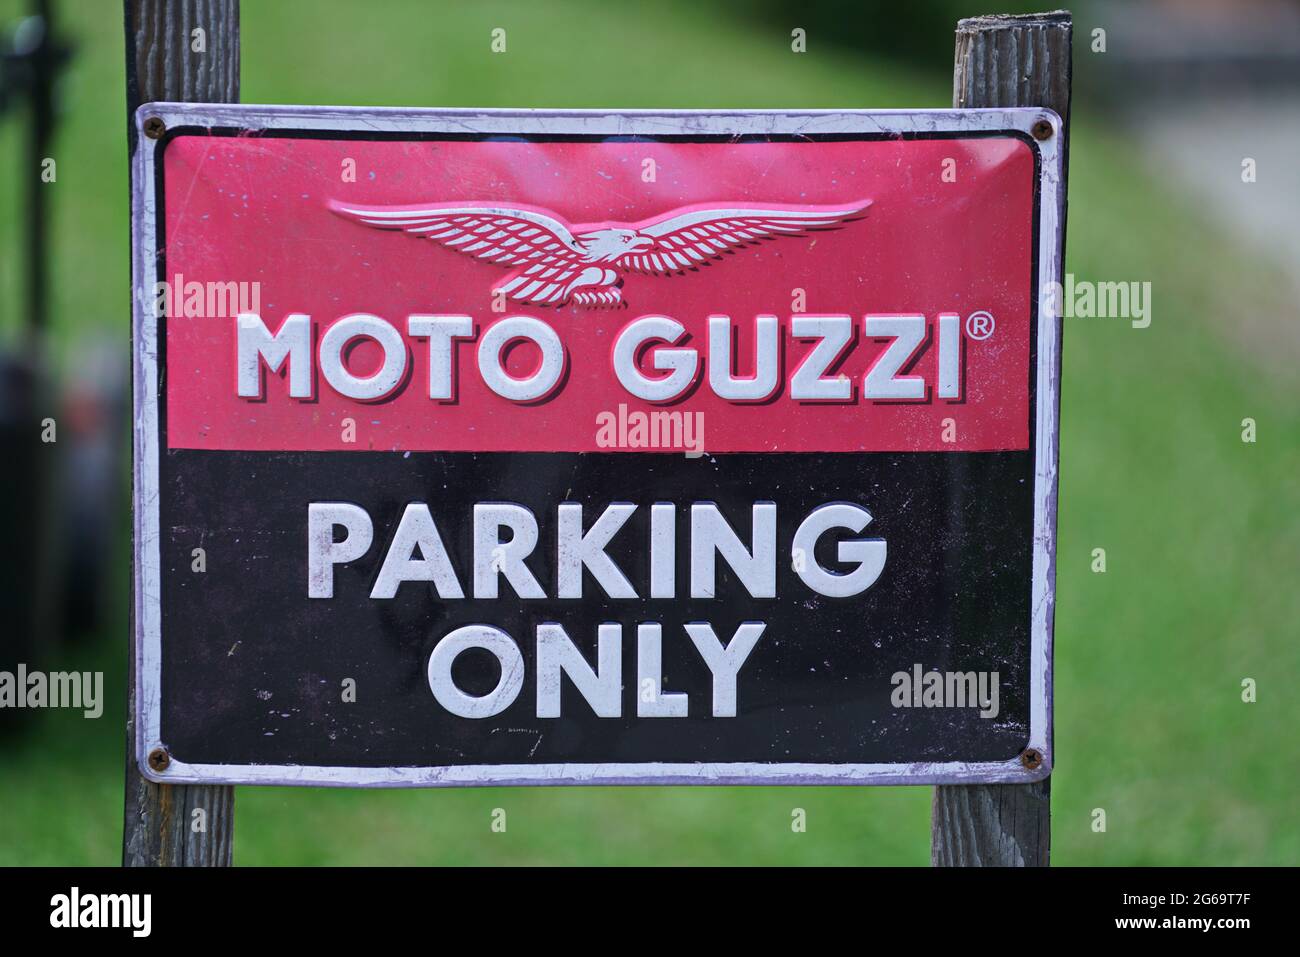 MOTO GUZZI Parking Only Sign 